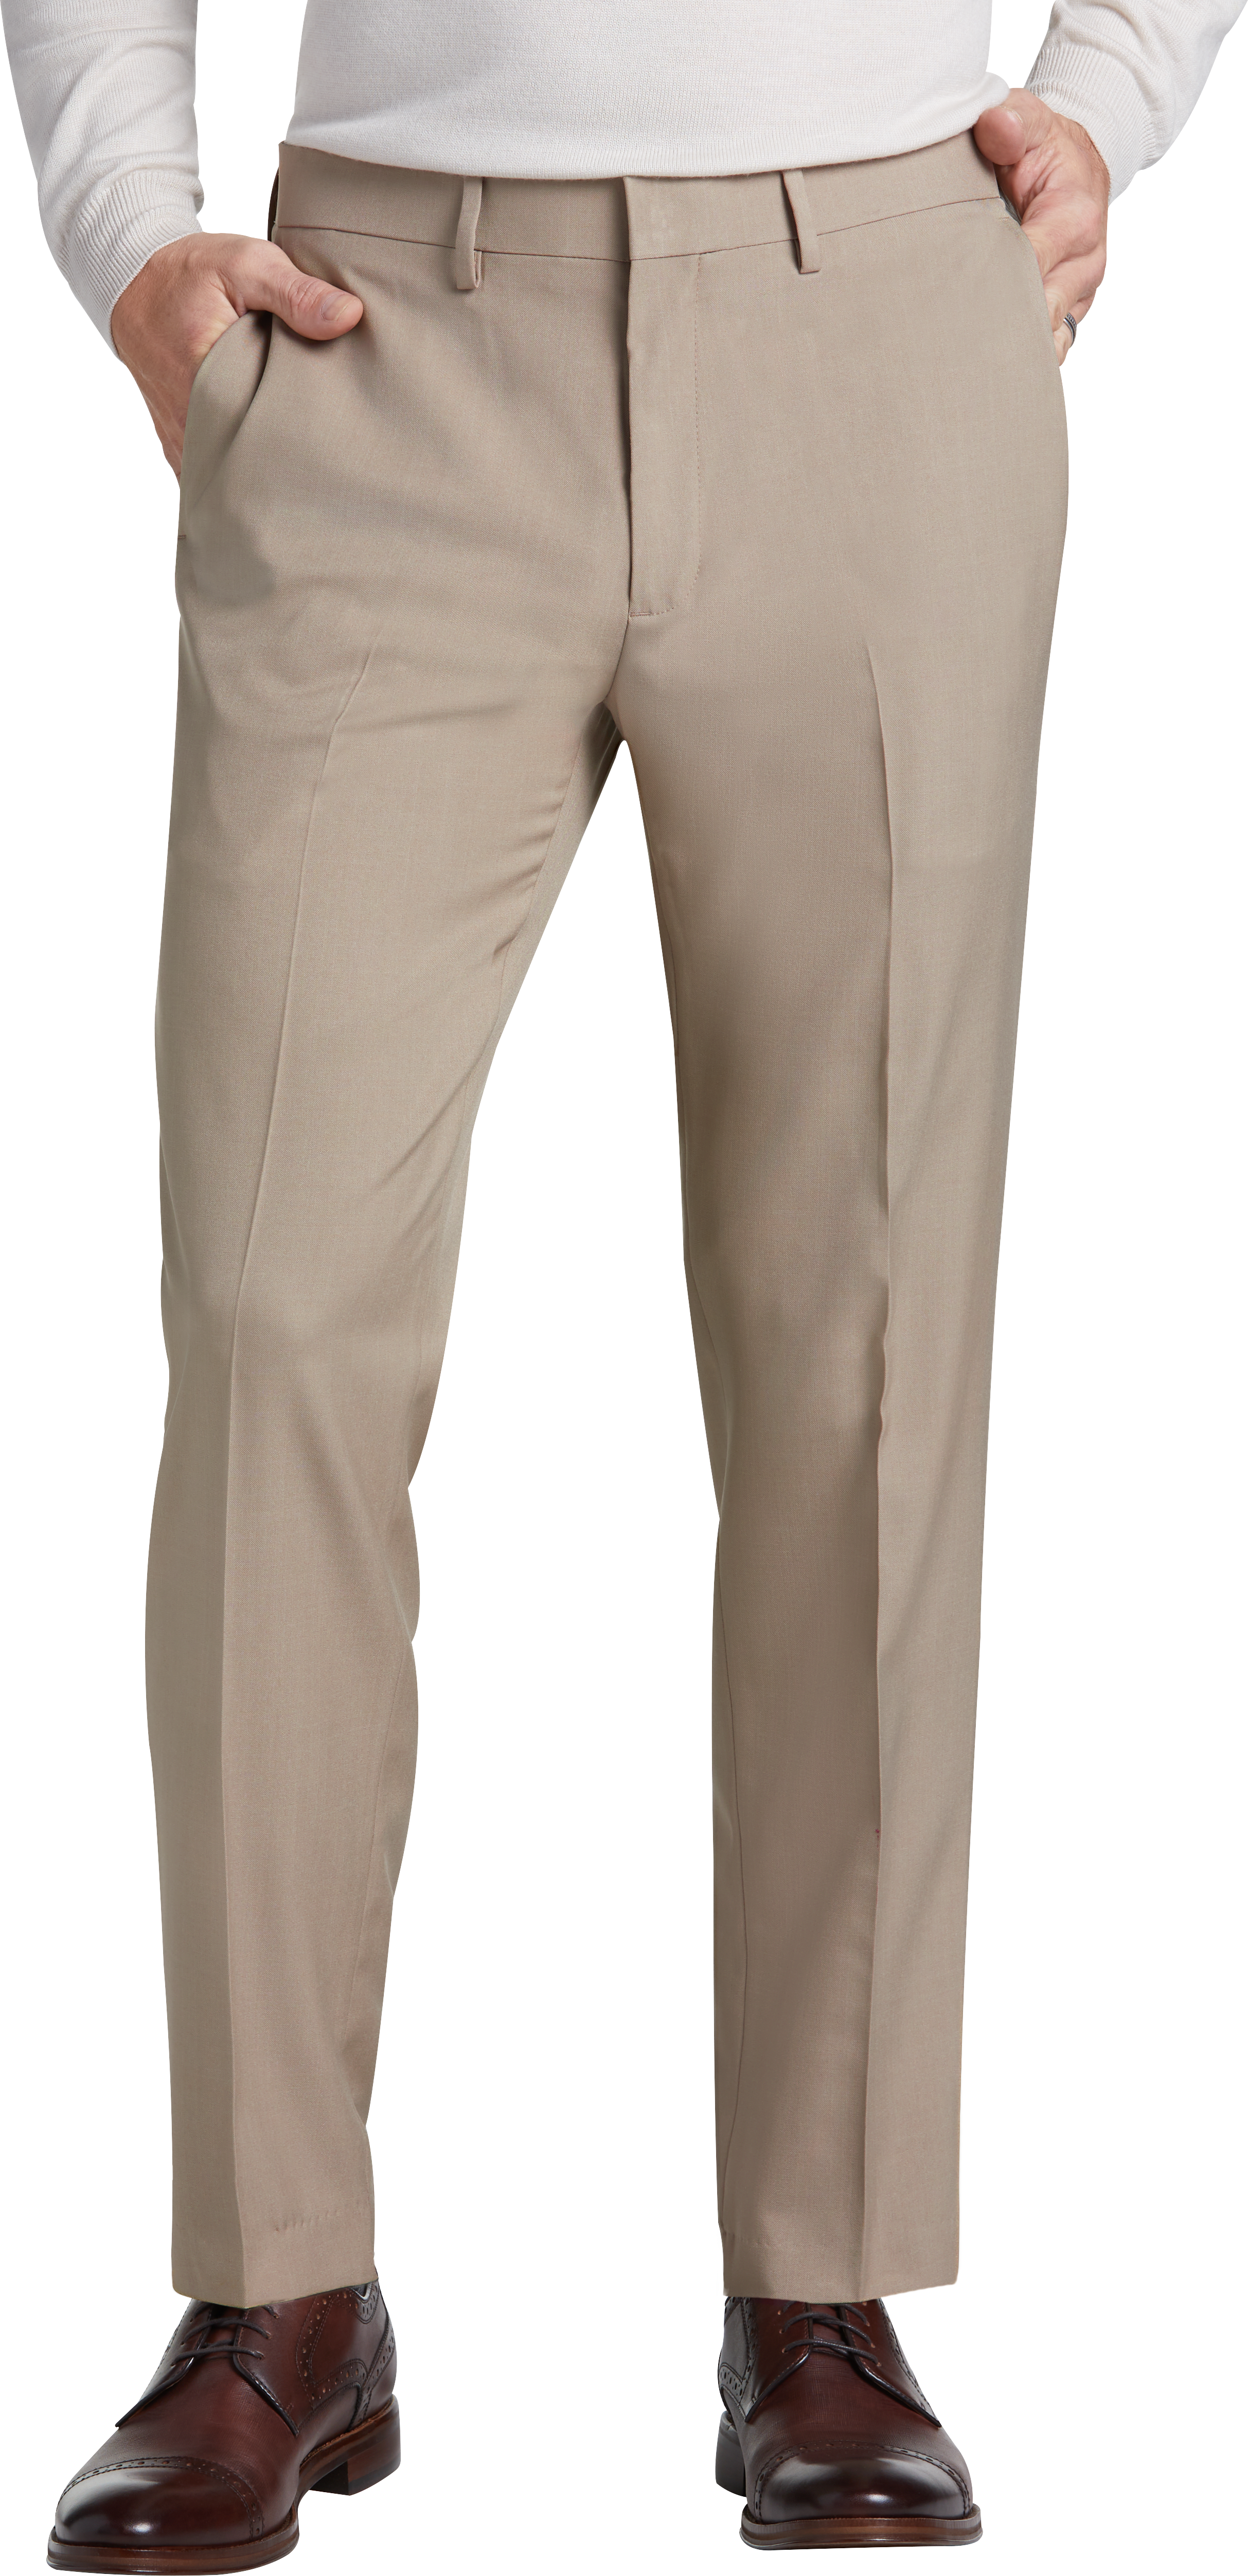 Haggar Premium Comfort 4-Way Stretch Dress Pants, Khaki - Men's Pants ...